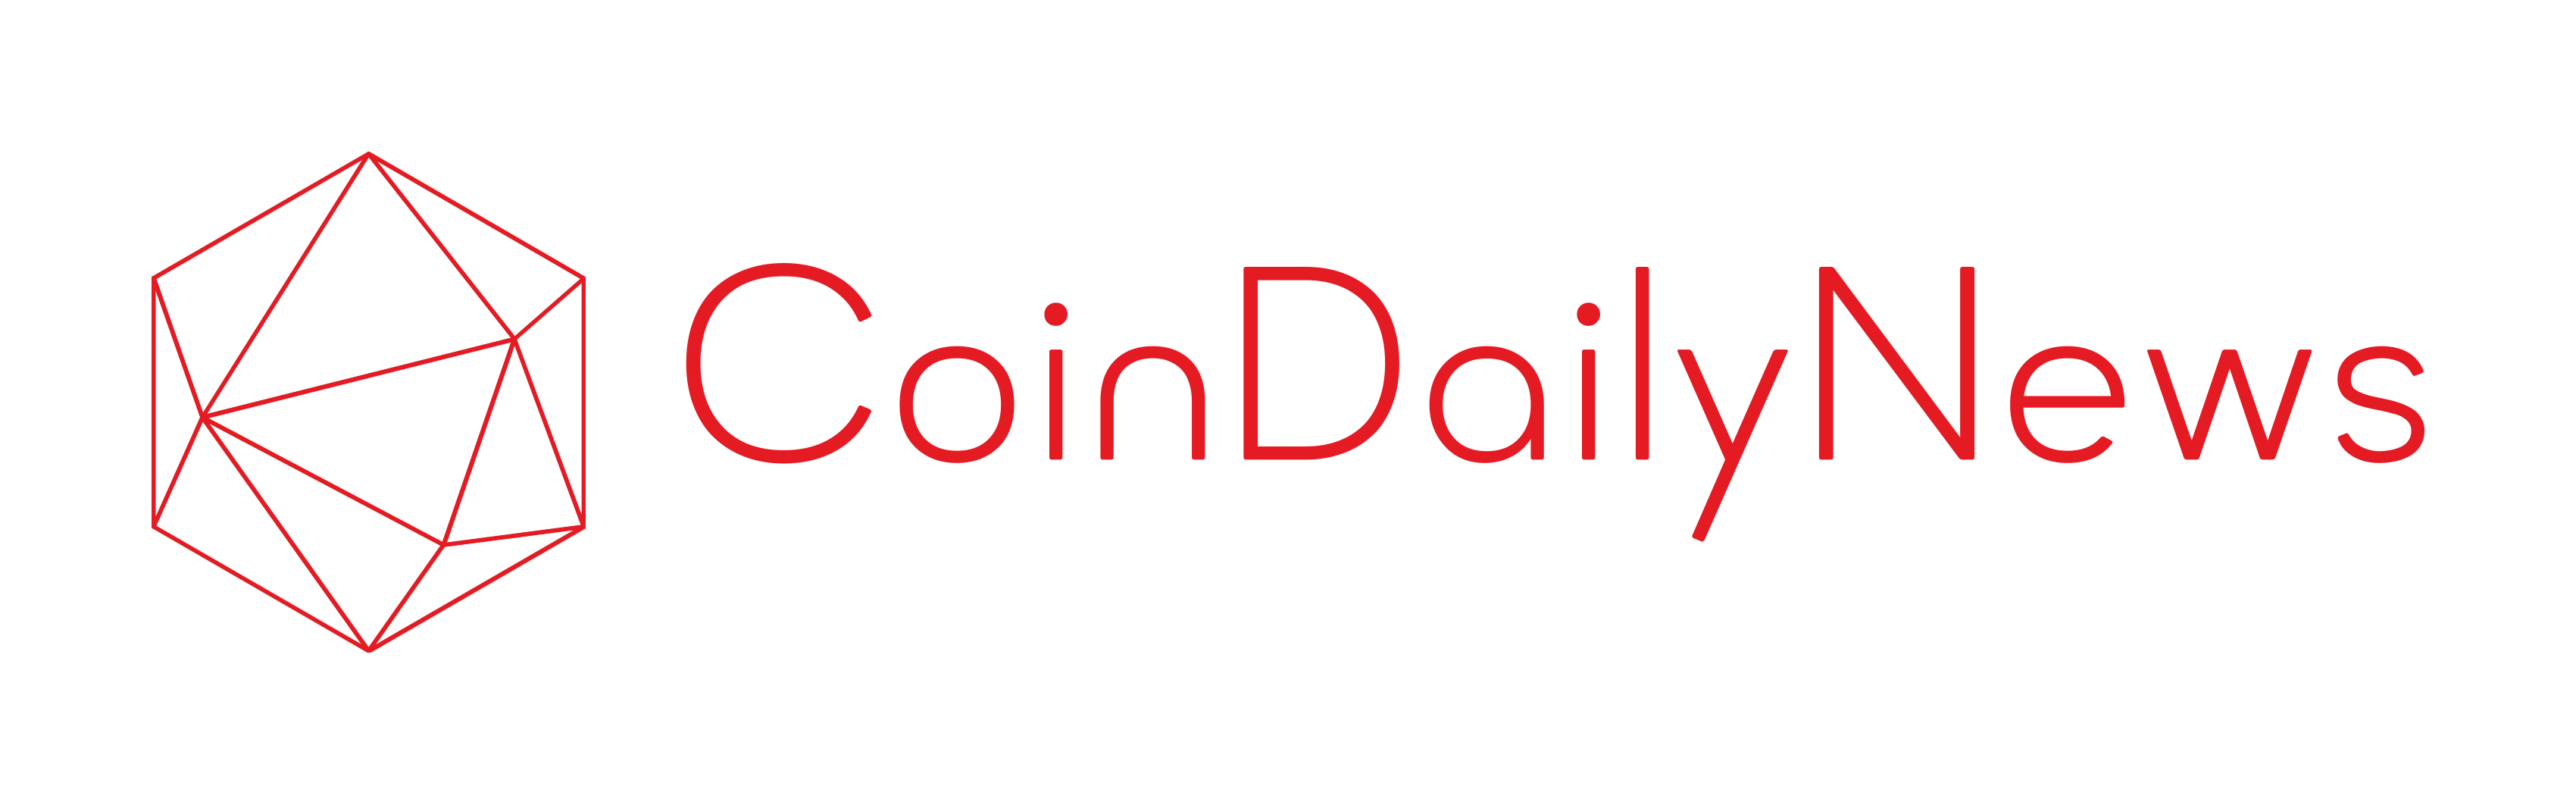 Coin Daily News